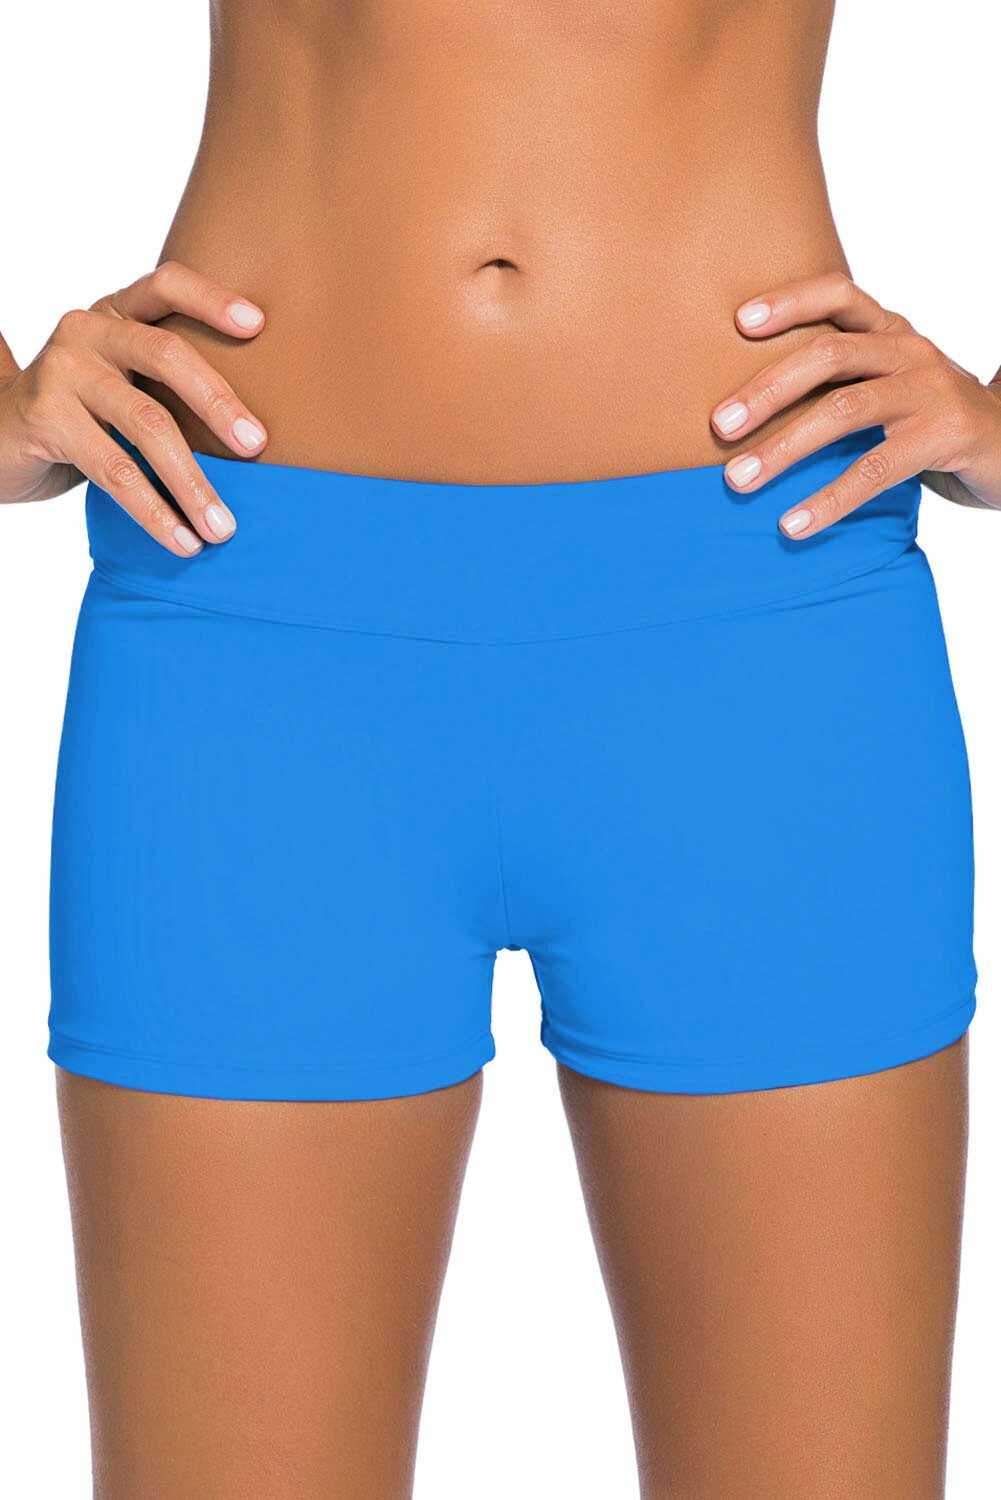 Blue Wide Waistband Swimsuit Bottom Shorts